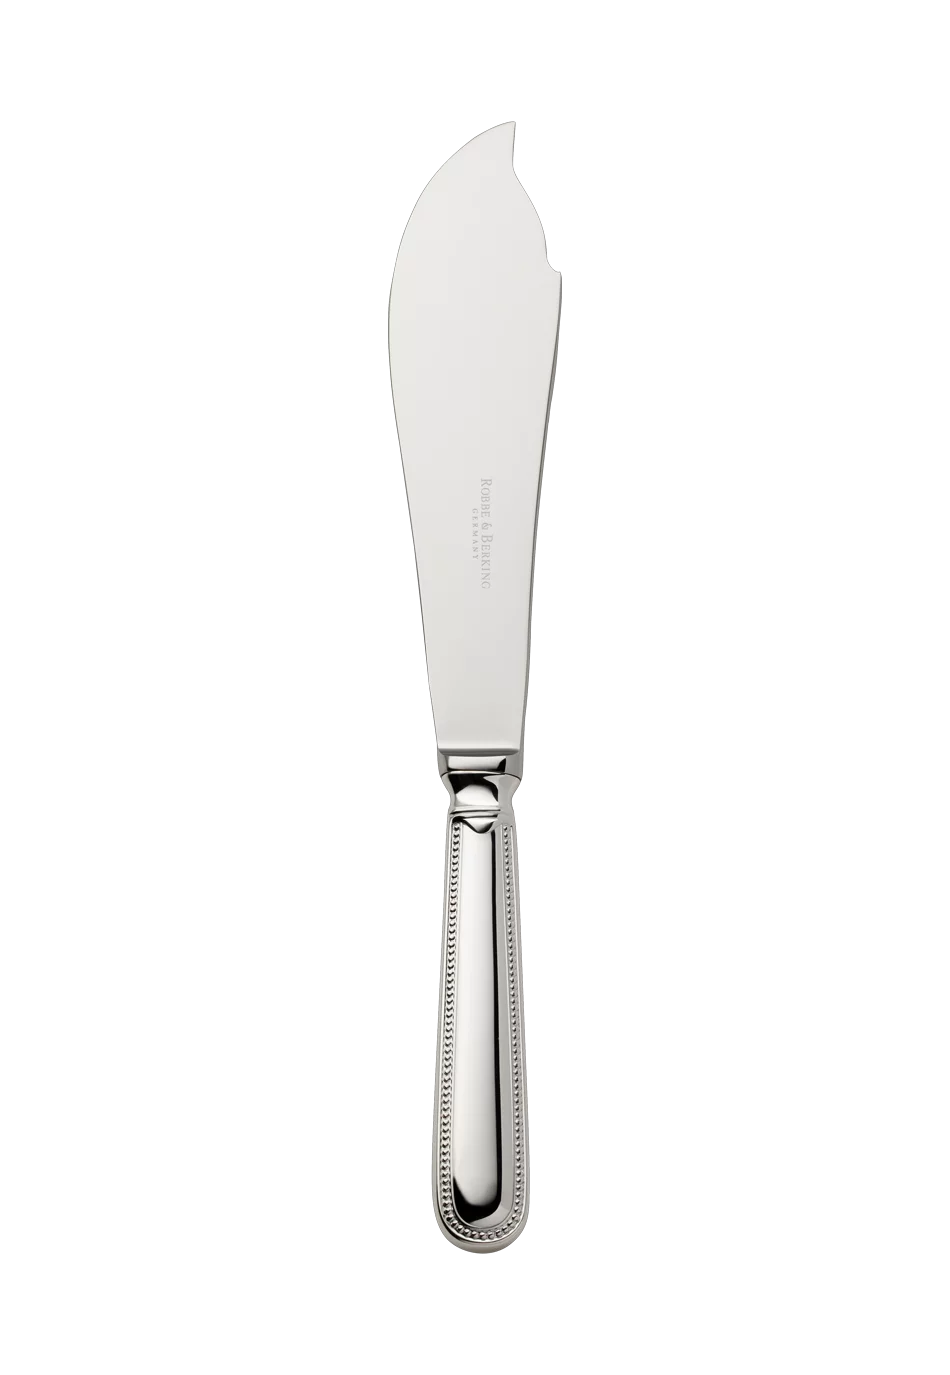 Französisch-Perl Tart Knife (150g massive silverplated)